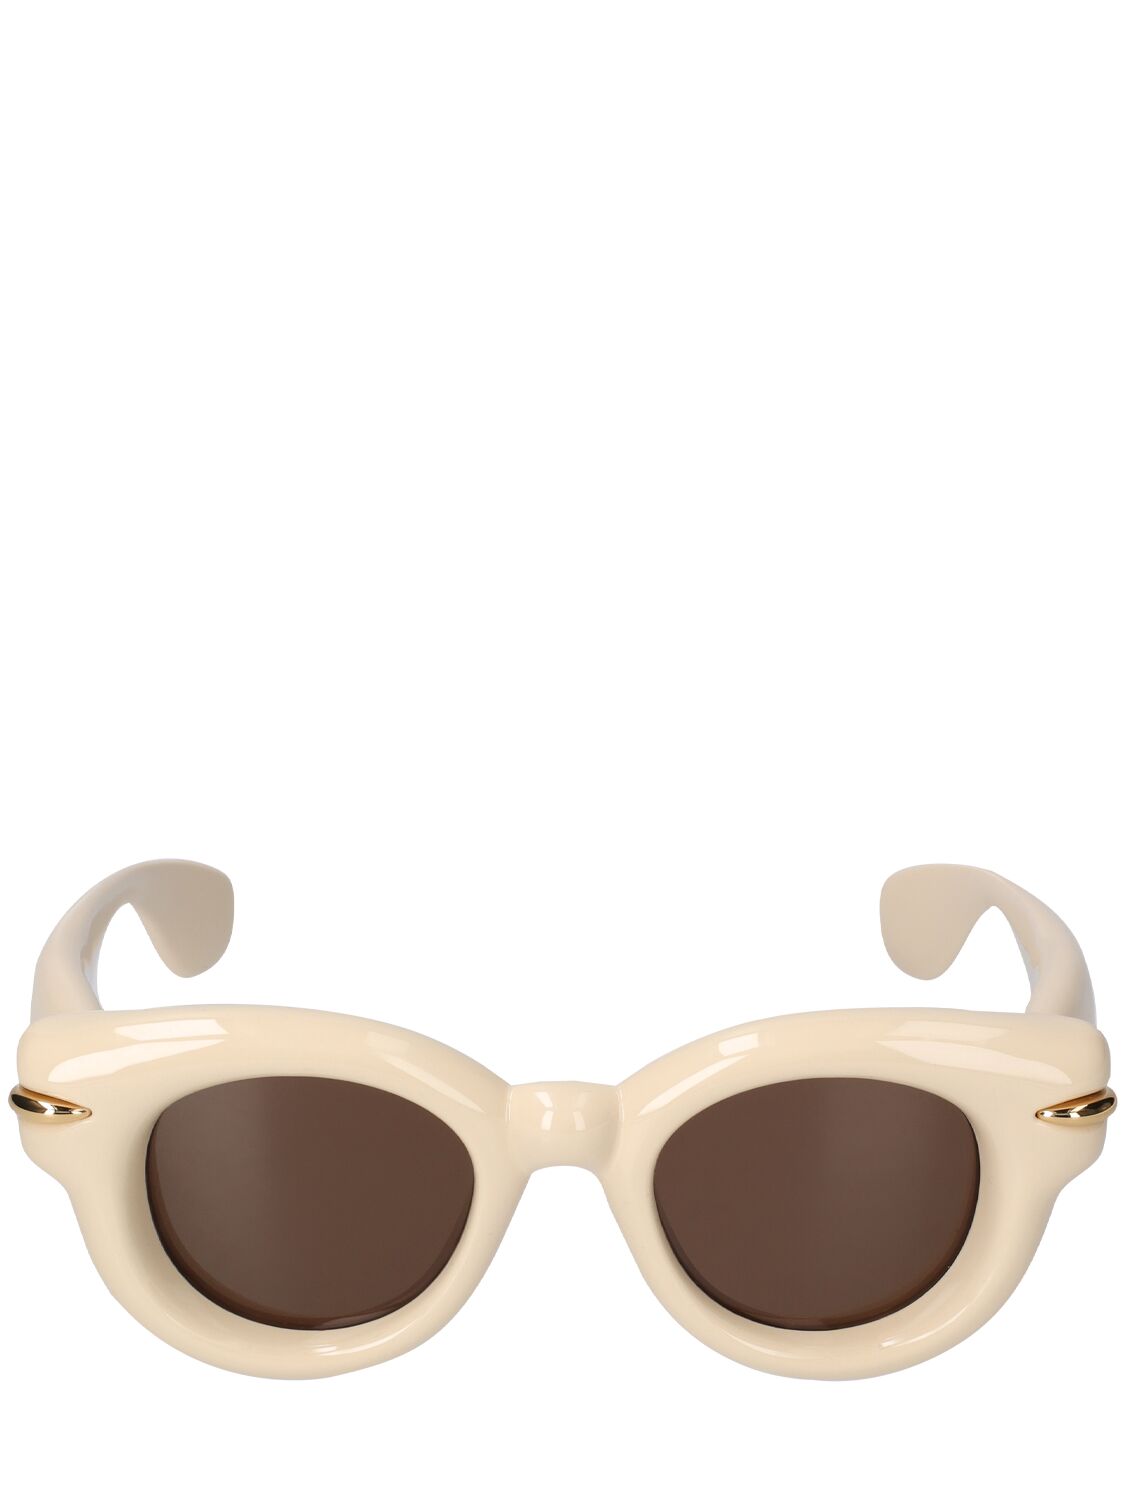 Loewe Inflated Round Sunglasses In Creme